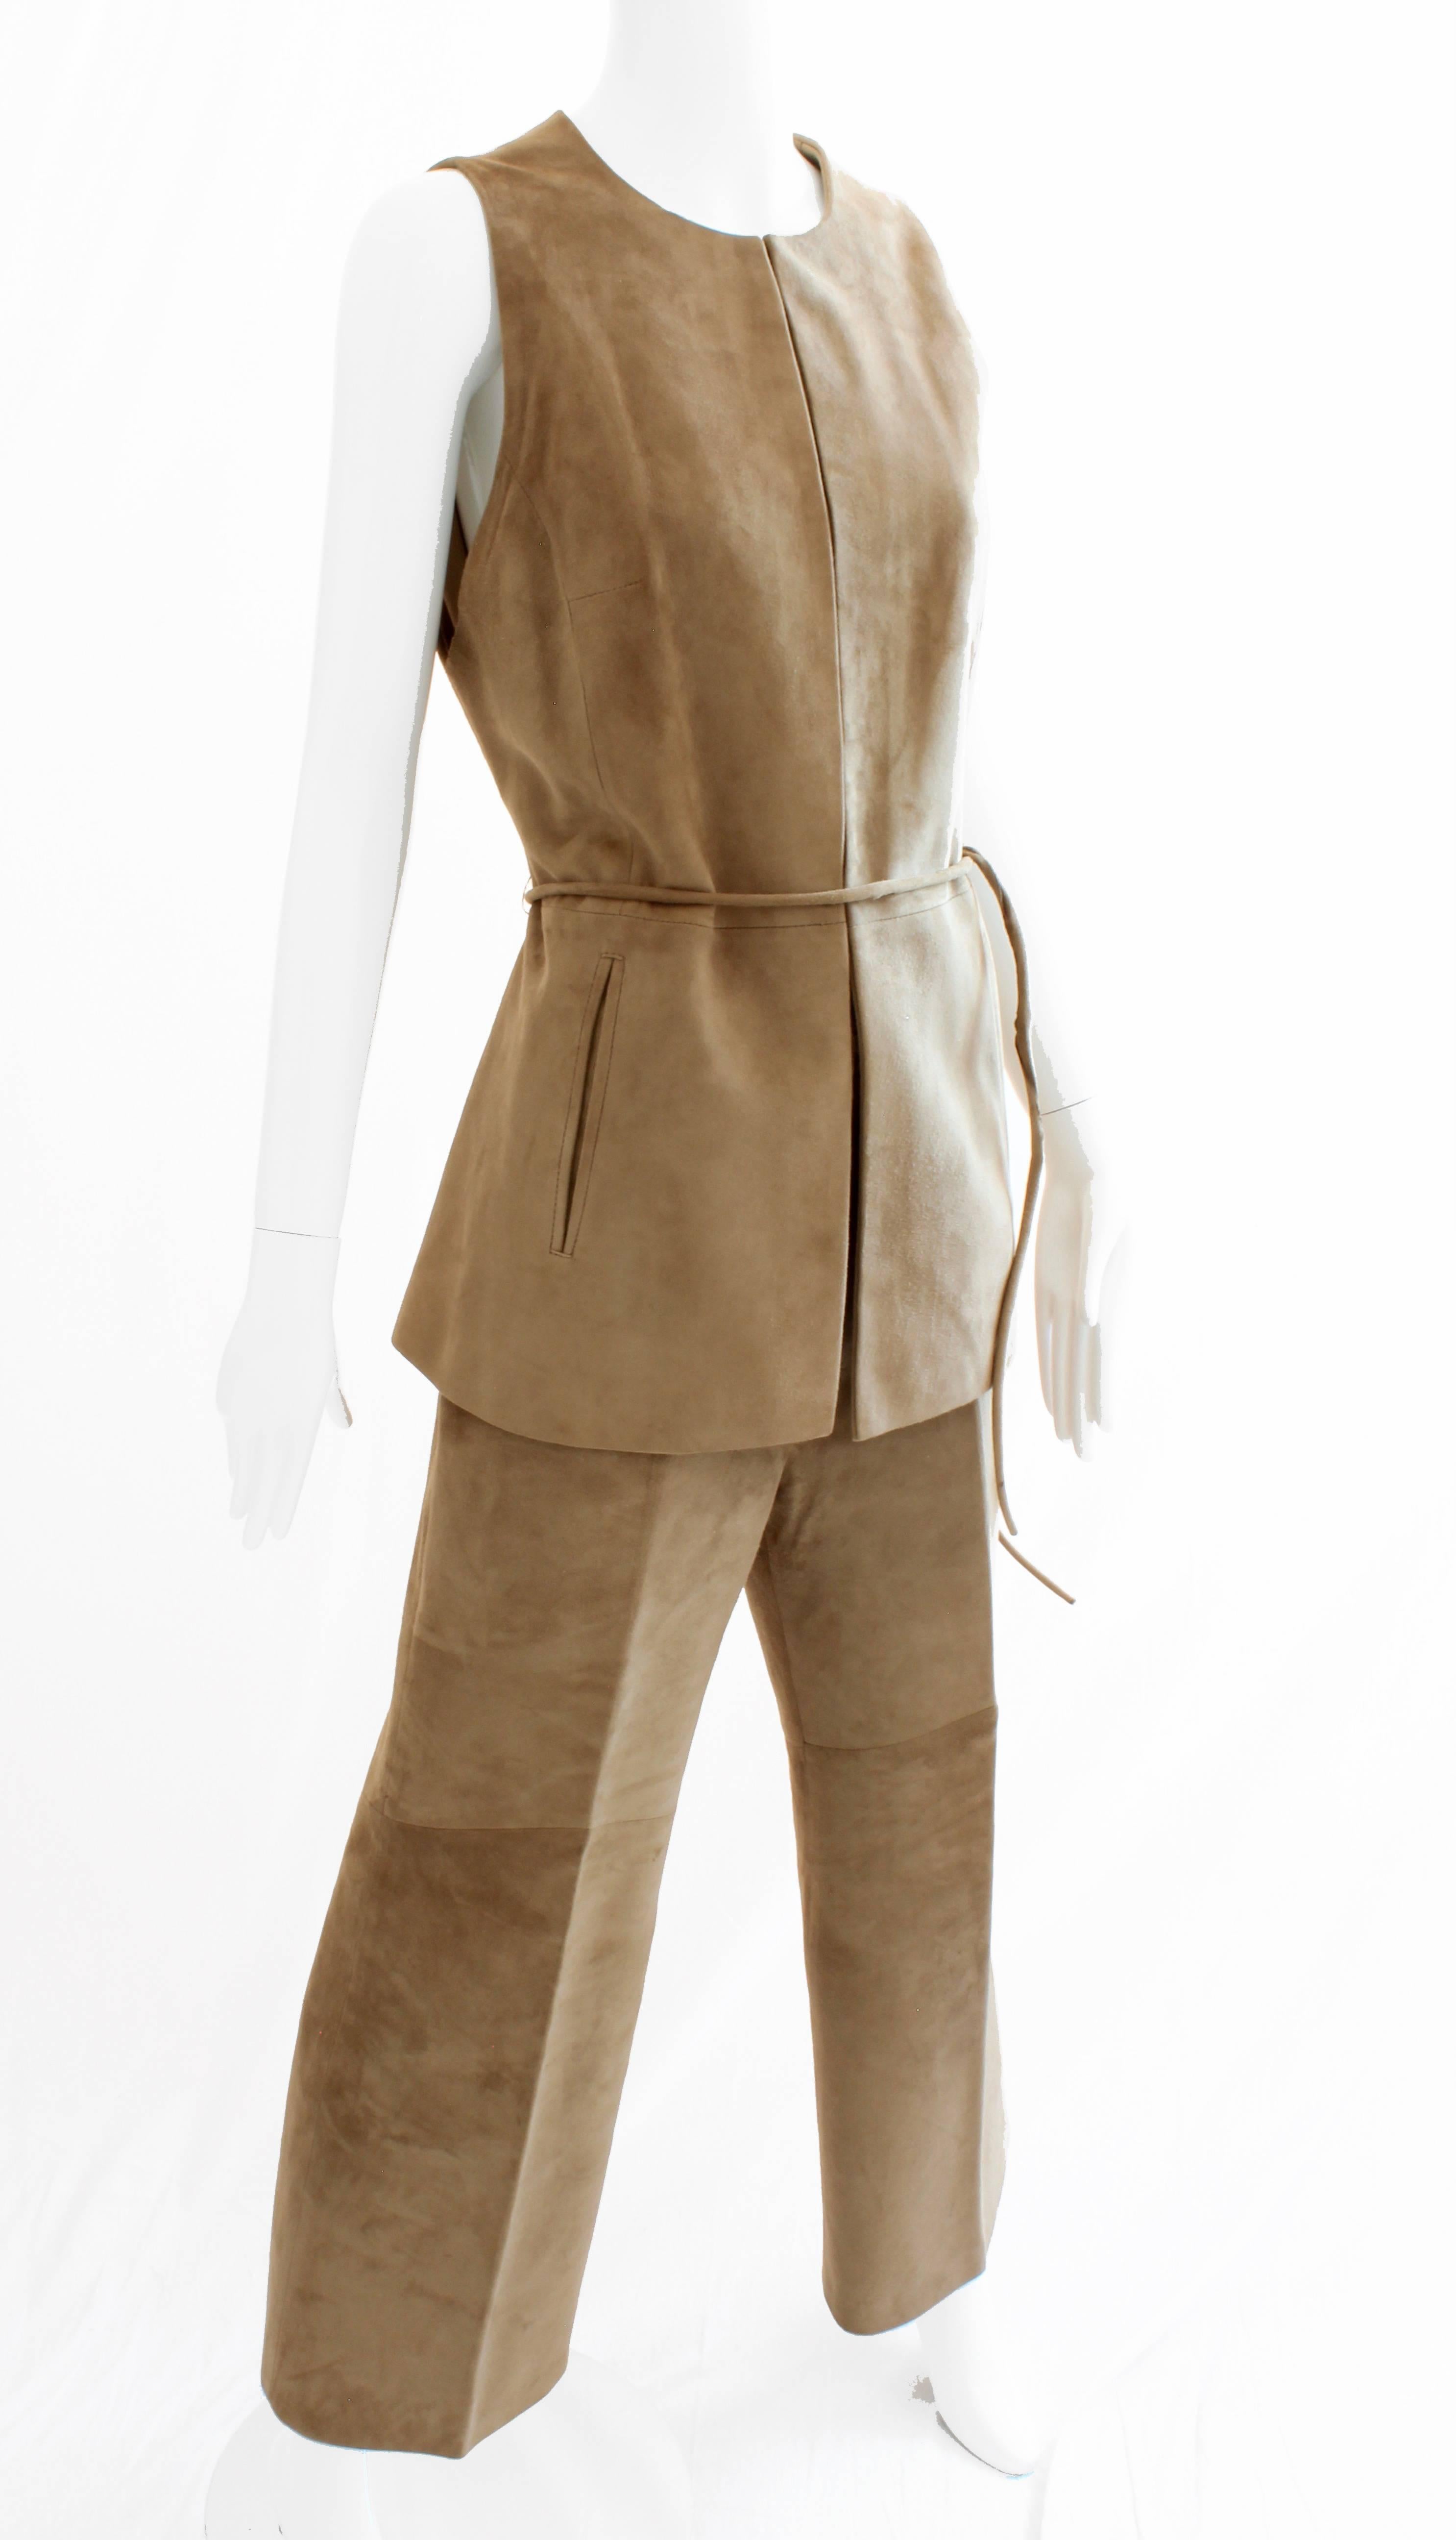 Brown Loewe Madrid Camel Suede Leather Vest Pant and Belt Suit Set 